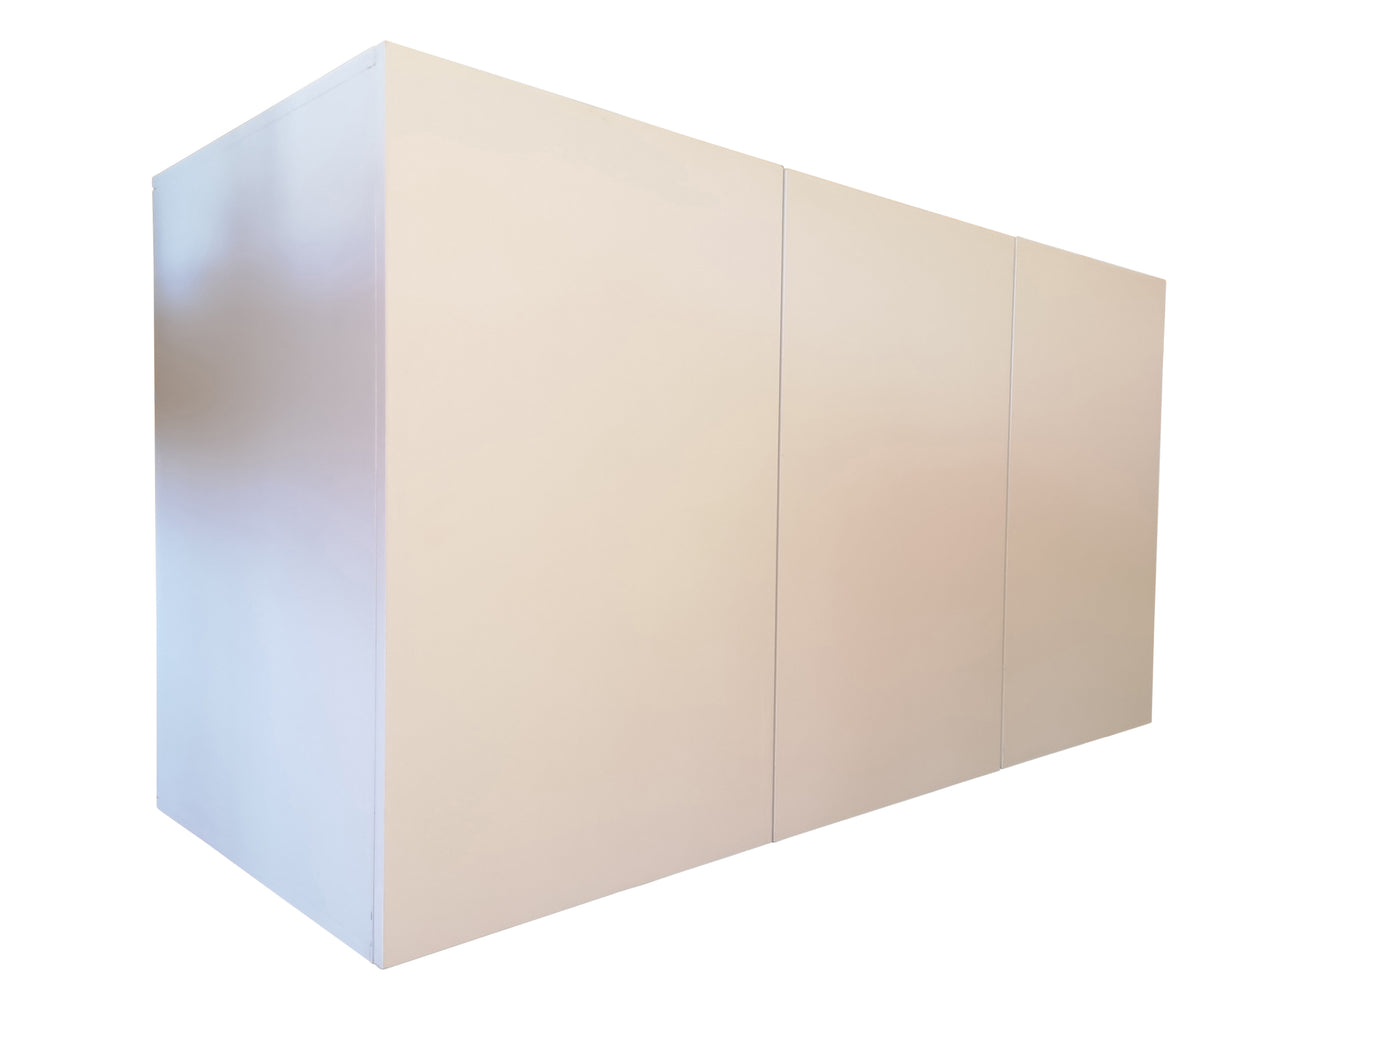 Terrariemöbler - Pro terrariemöbel - 150x60 cm